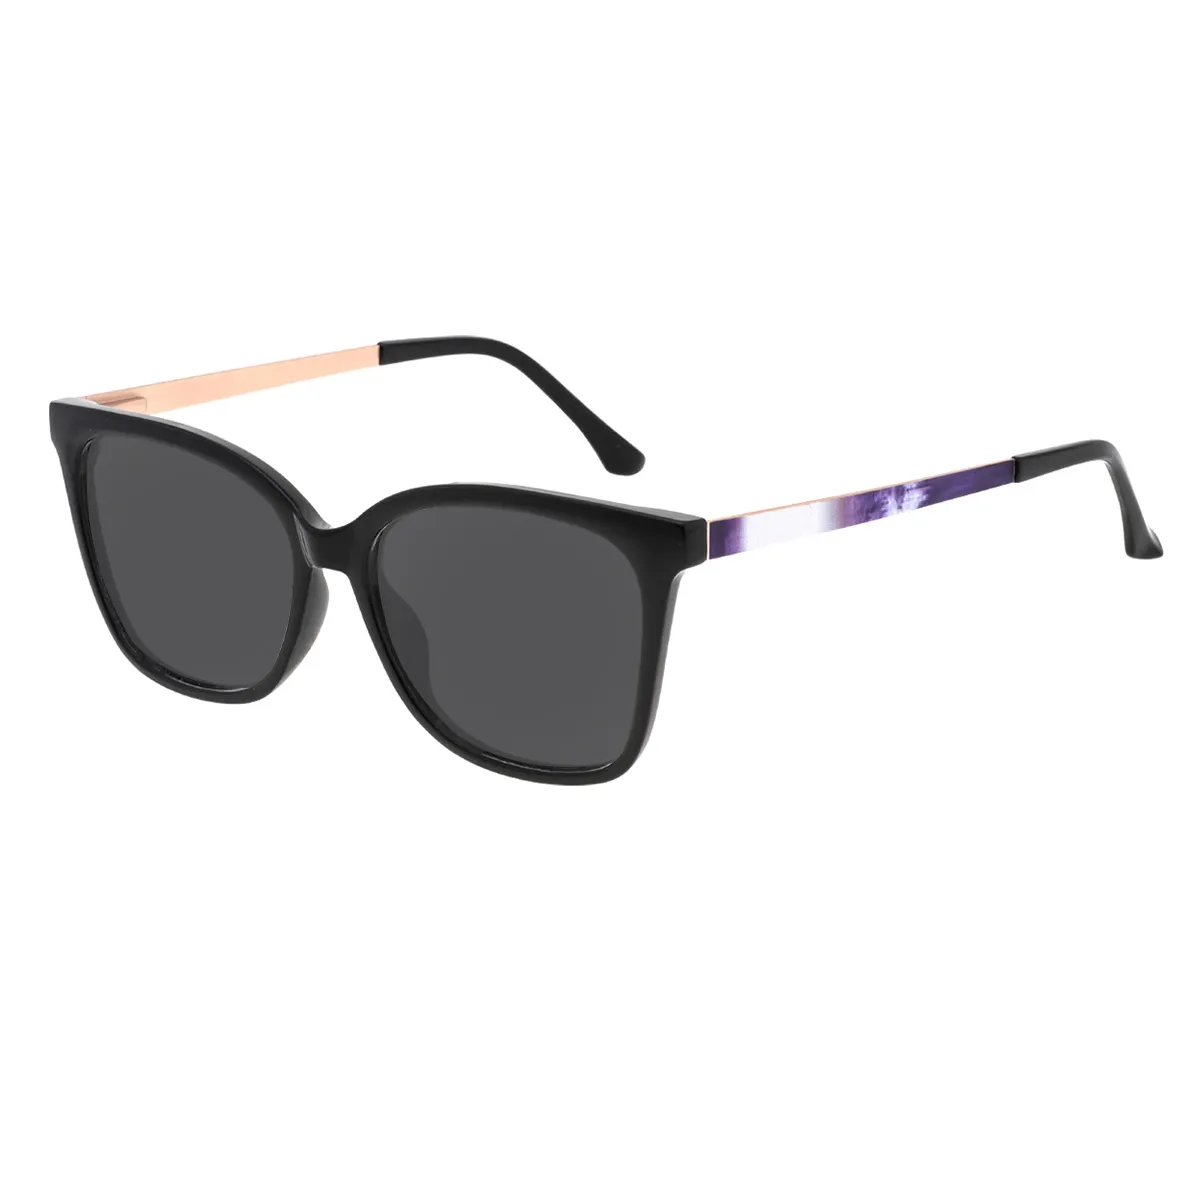 Ophelia - Square Black Sunglasses for Women